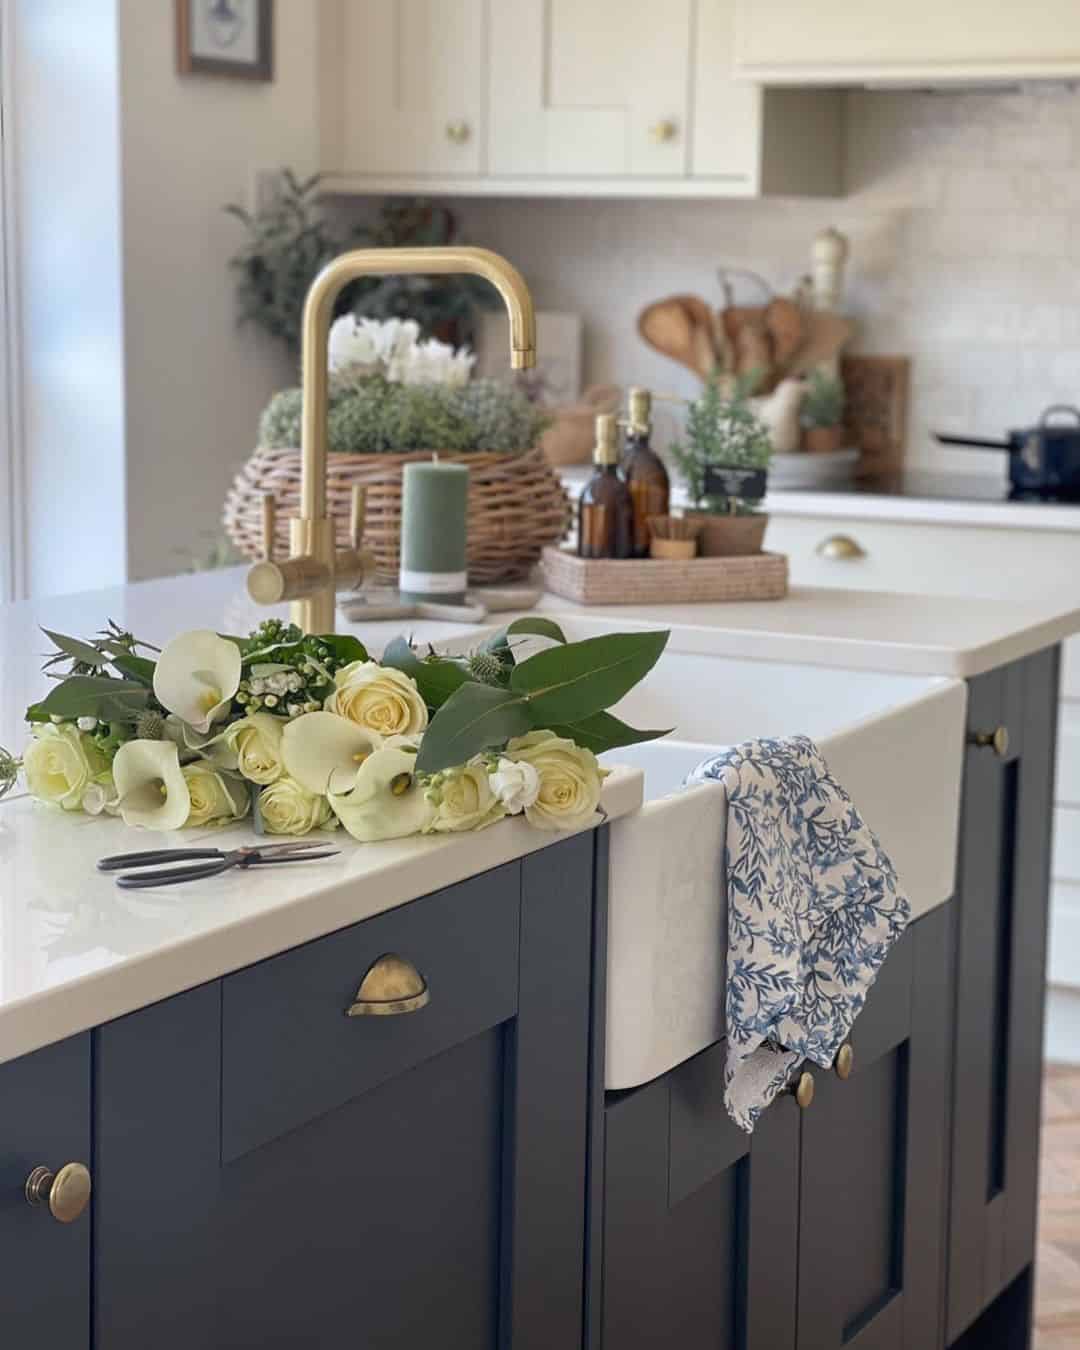 https://www.soulandlane.com/wp-content/uploads/2022/09/White-Roses-Laid-Near-a-Brass-Kitchen-Faucet.jpg